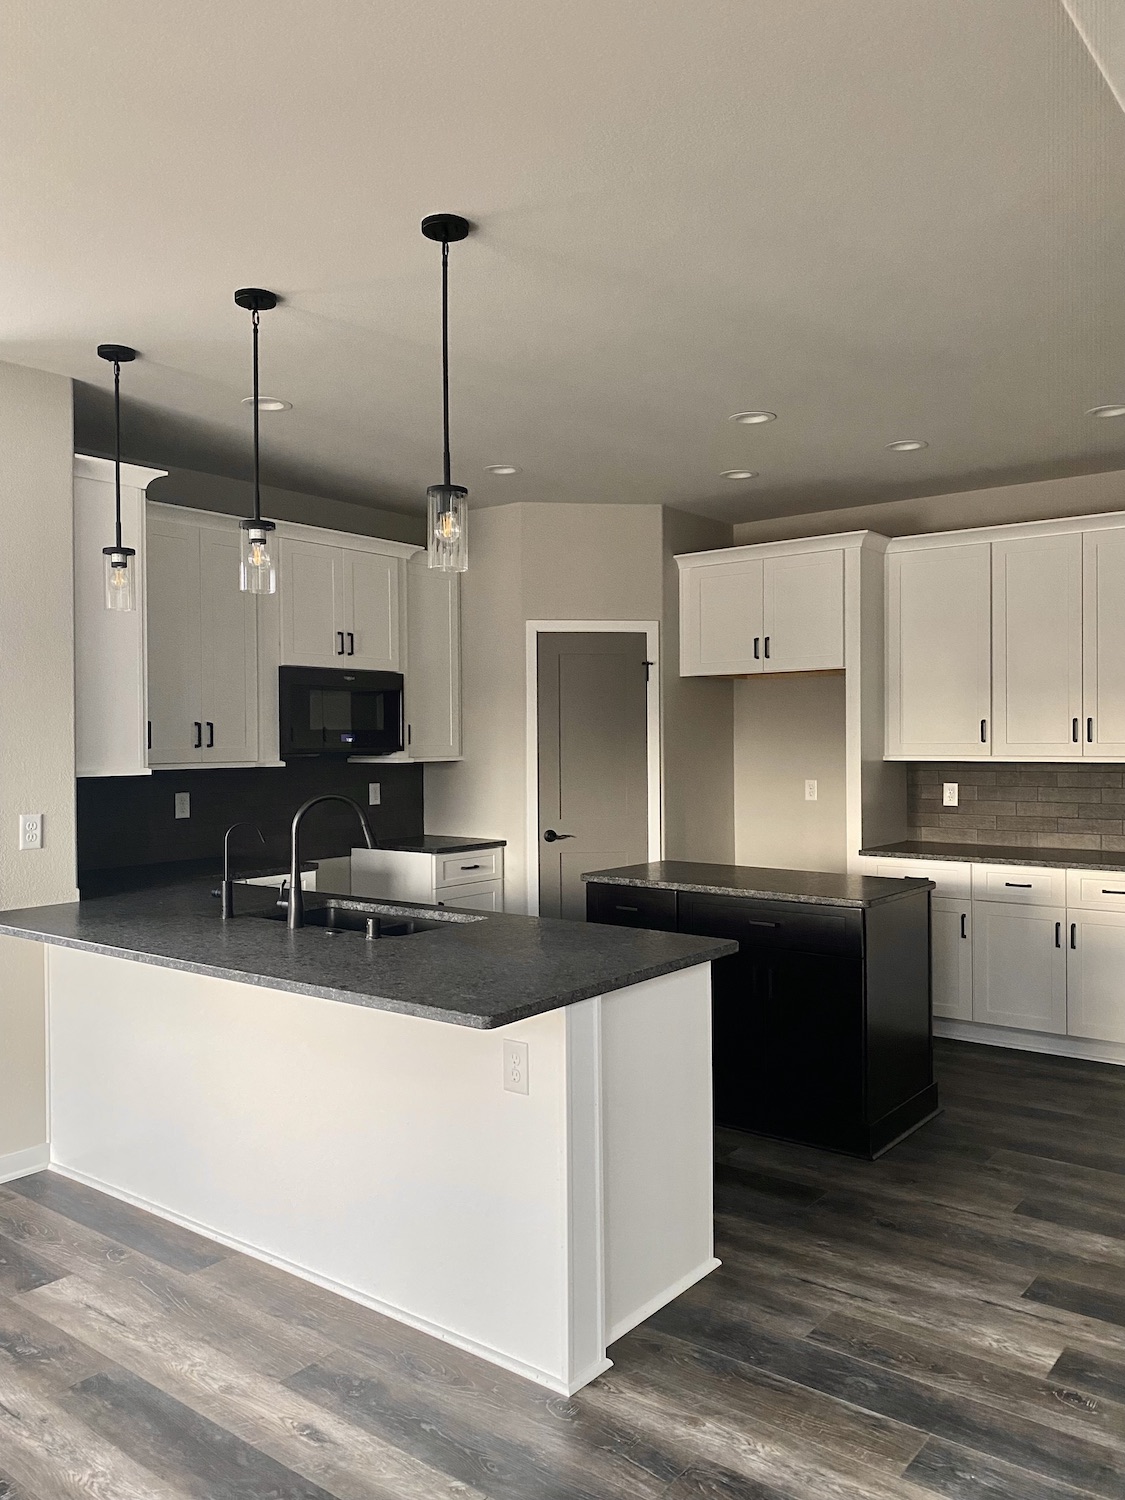 belman home builder new kitchen black and white palette 